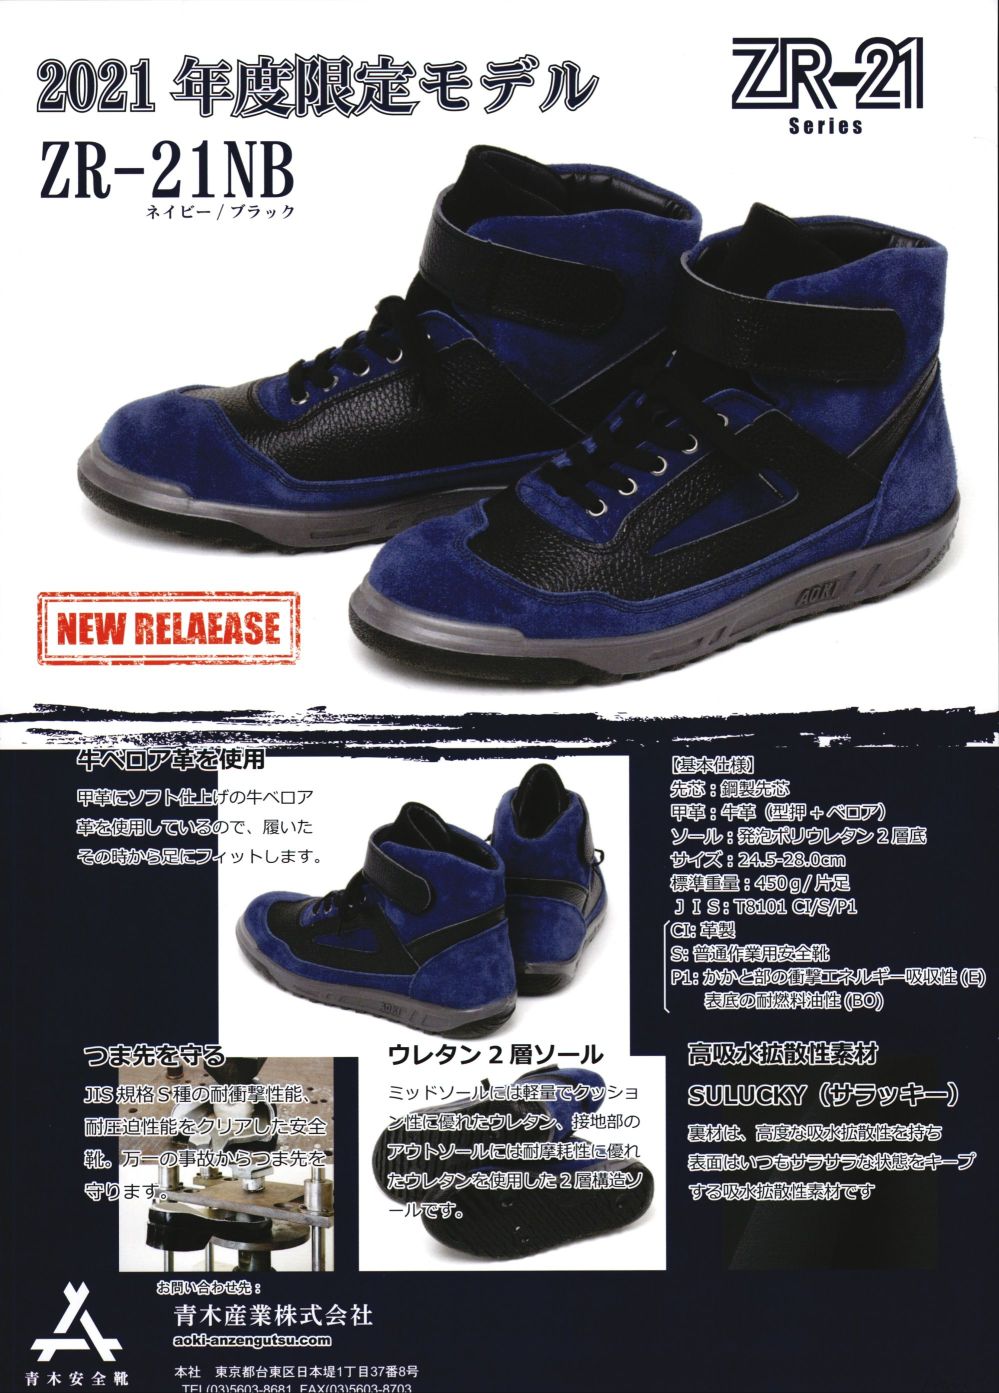 直送商品 青木安全靴 US-100BW 26.5cm US-100BW-26.5 m2-co.jp